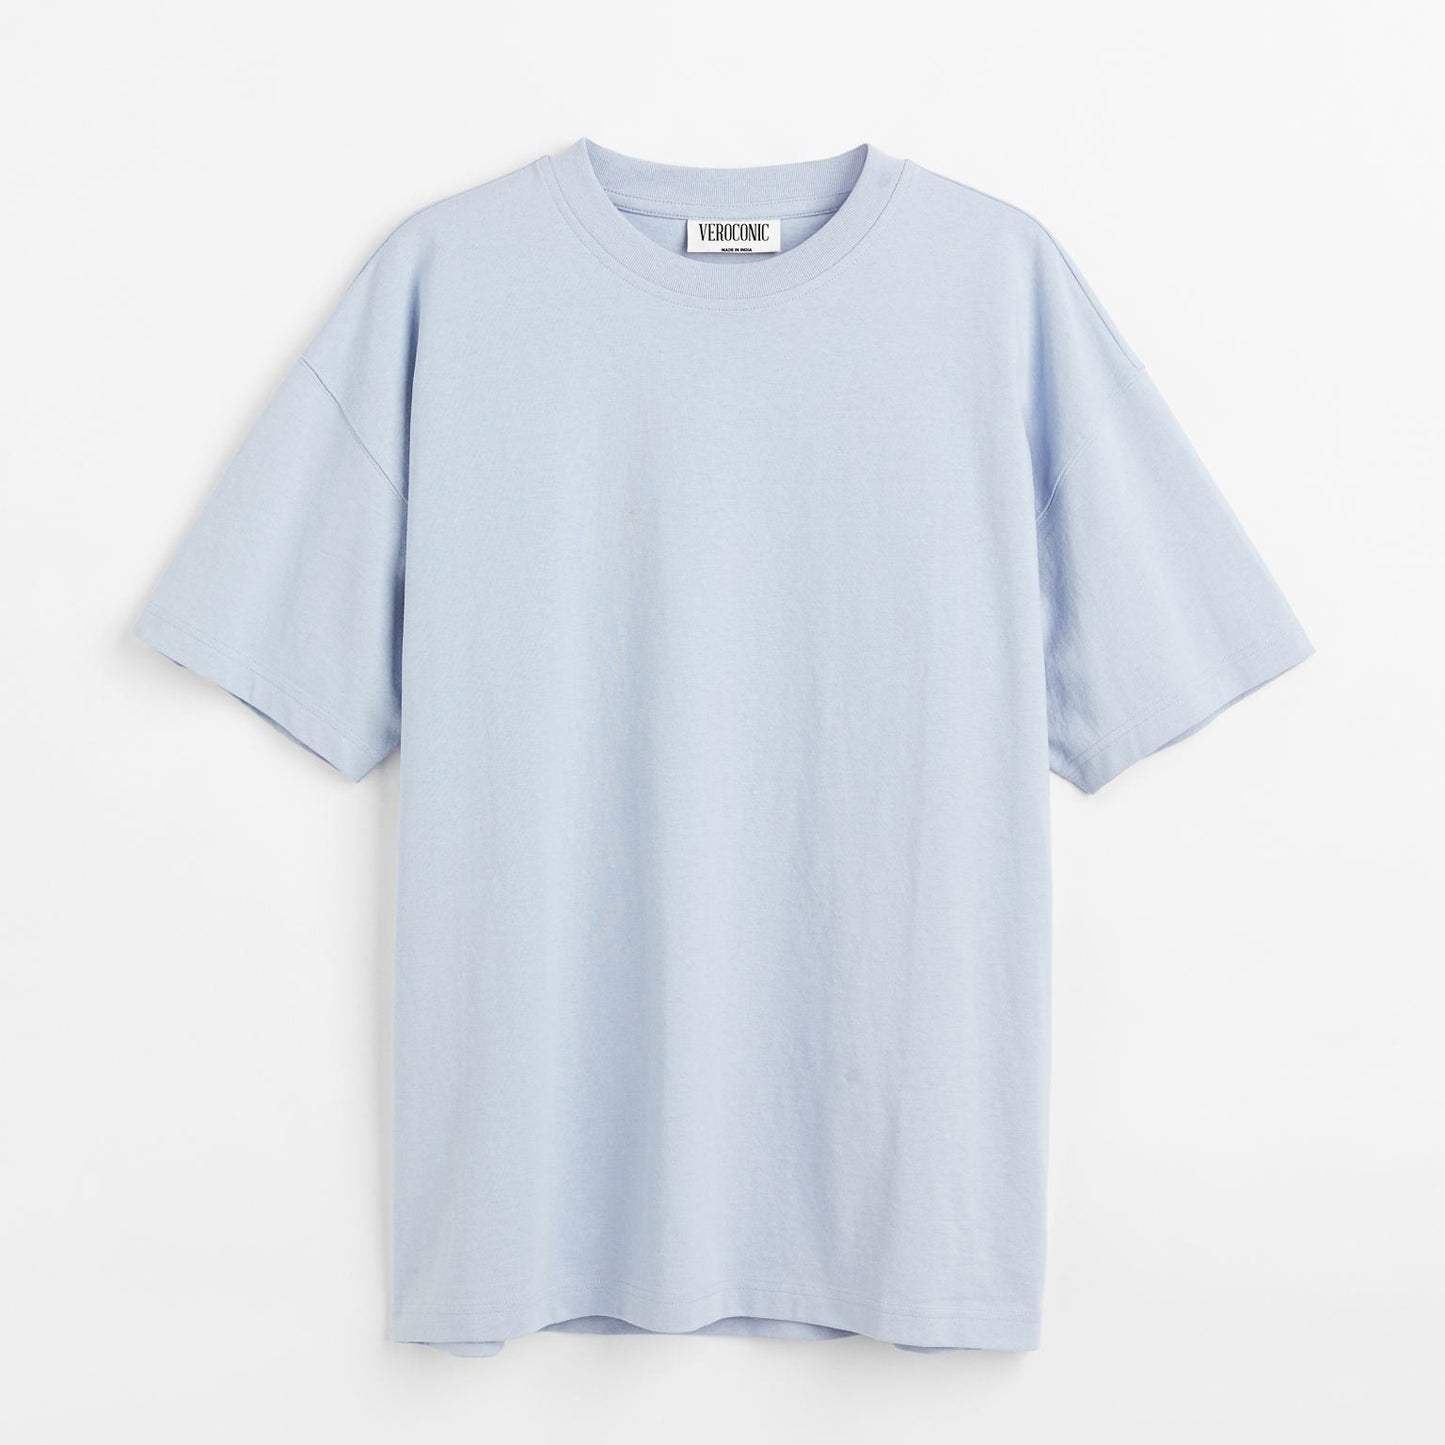 Plain Oversized Baby Blue Cotton T-shirt